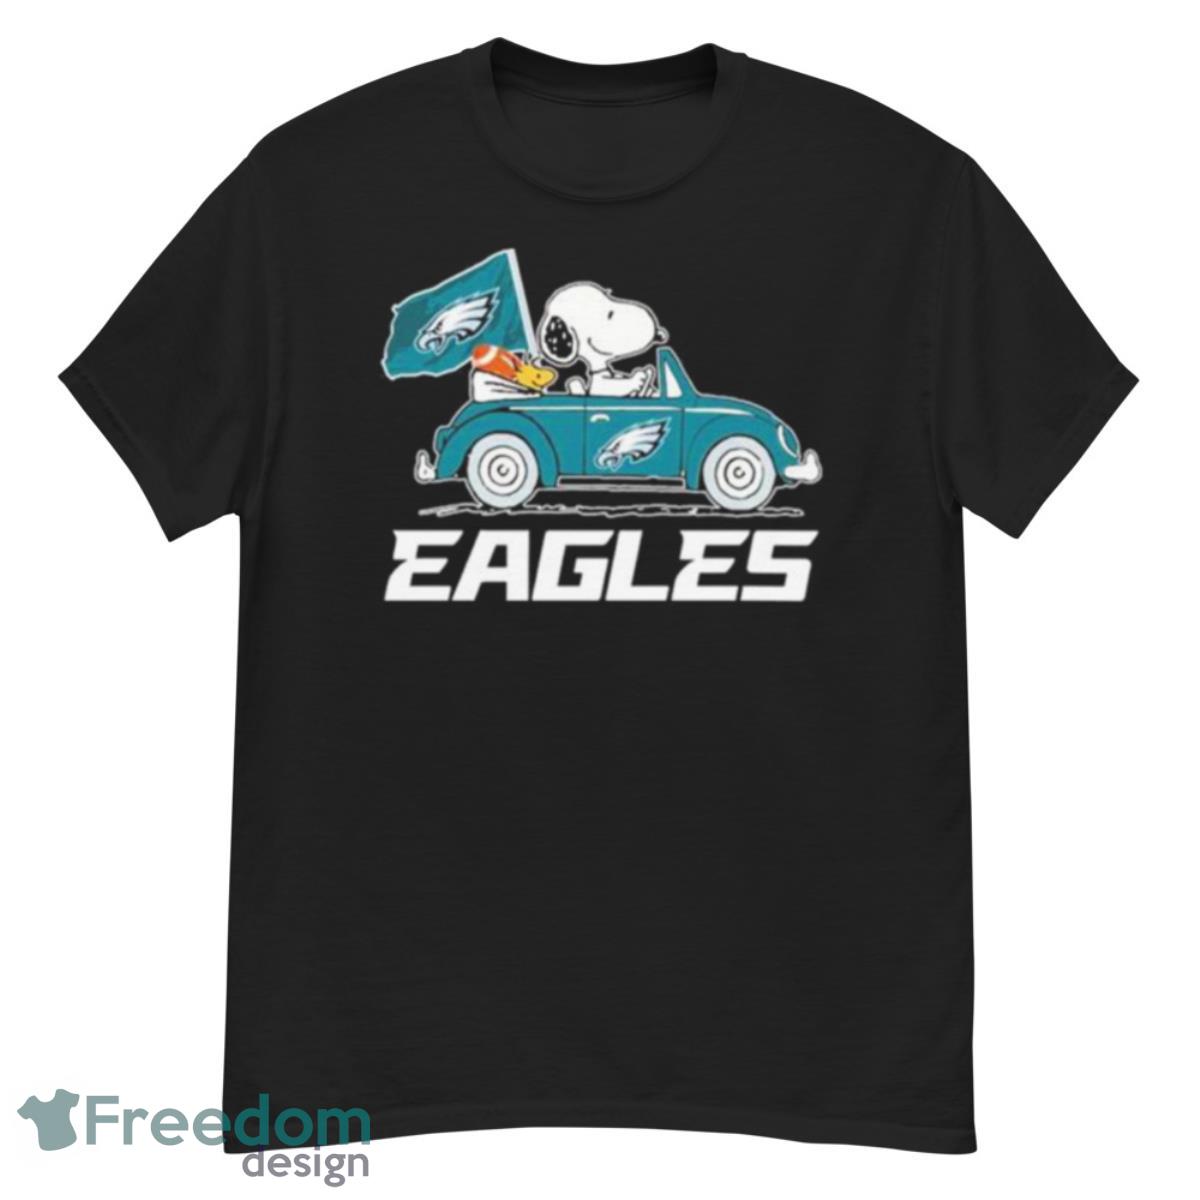 Philadelphia Eagles Graffiti Polo Shirt - T-shirts Low Price